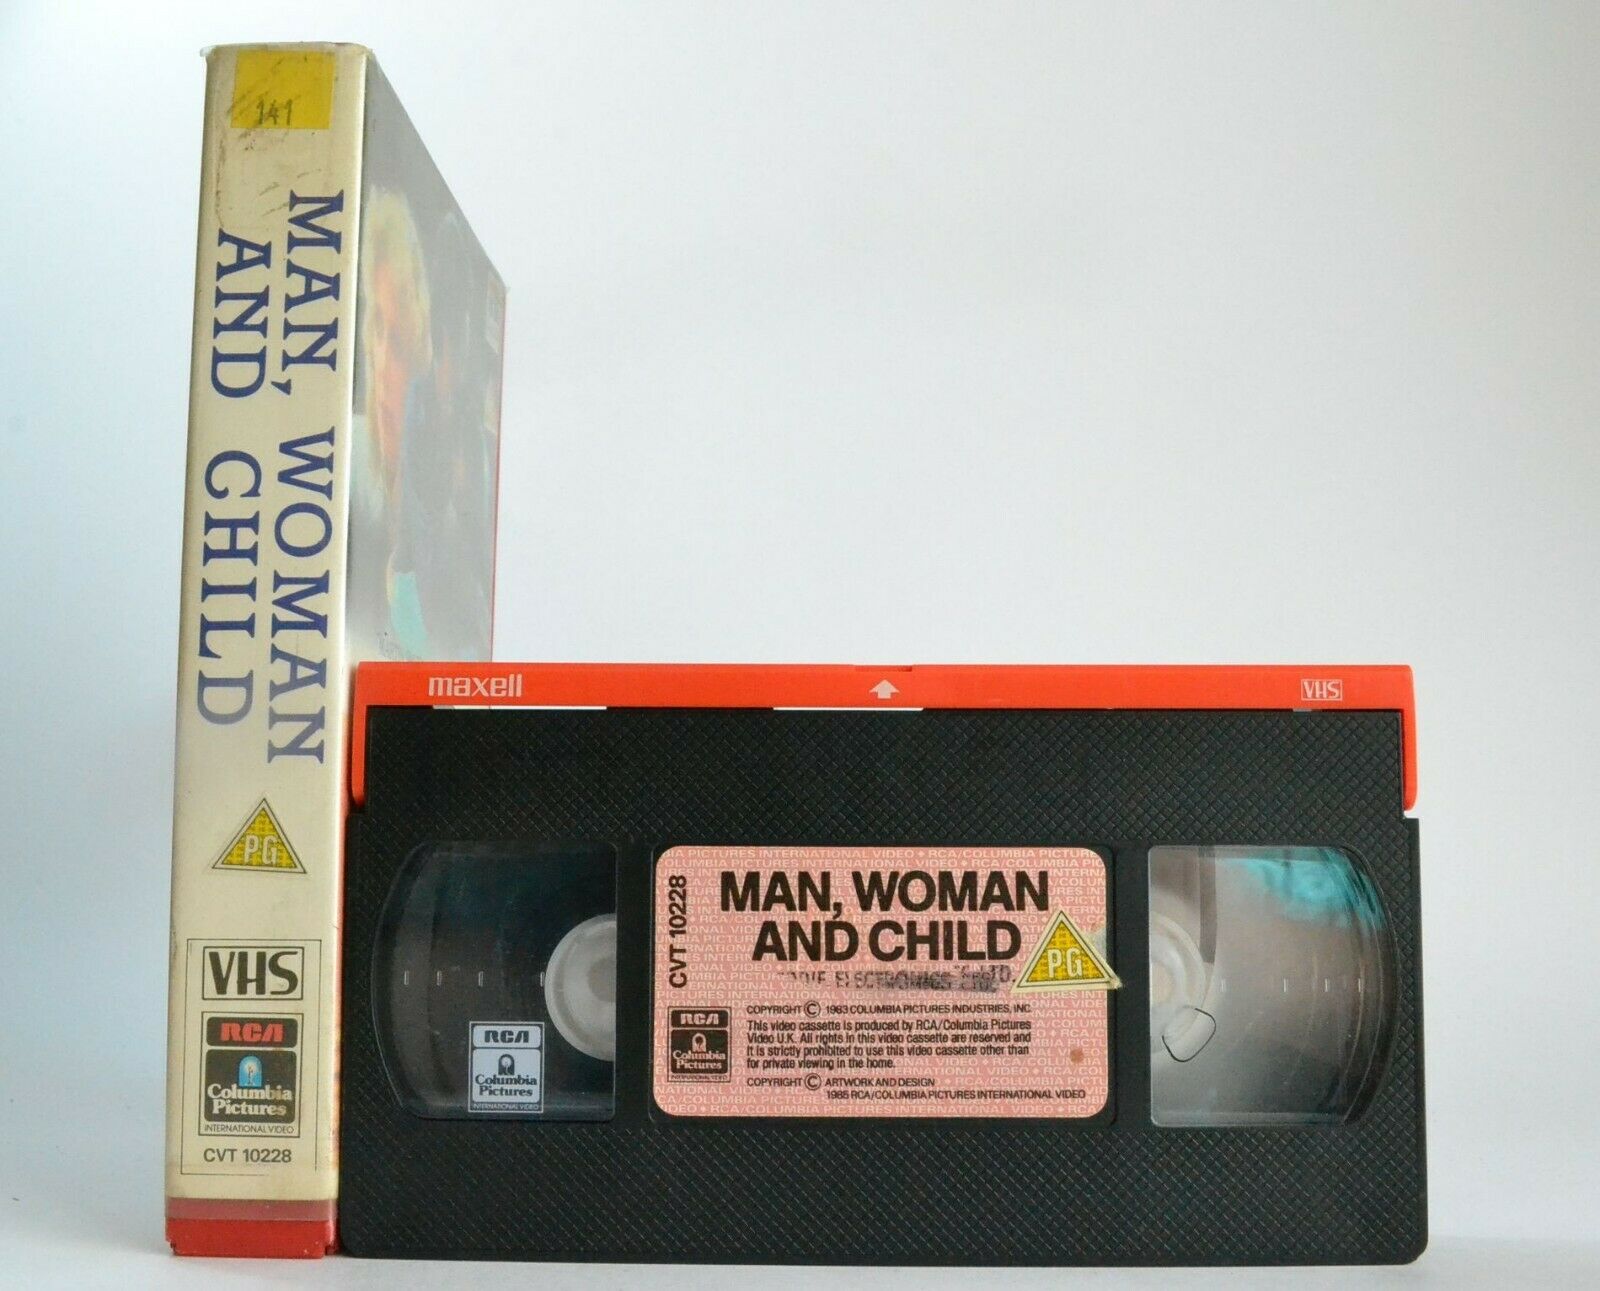 Man, Woman And Child - Drama - Large Box - Martin Sheen/Blythe Danner - Pal VHS-